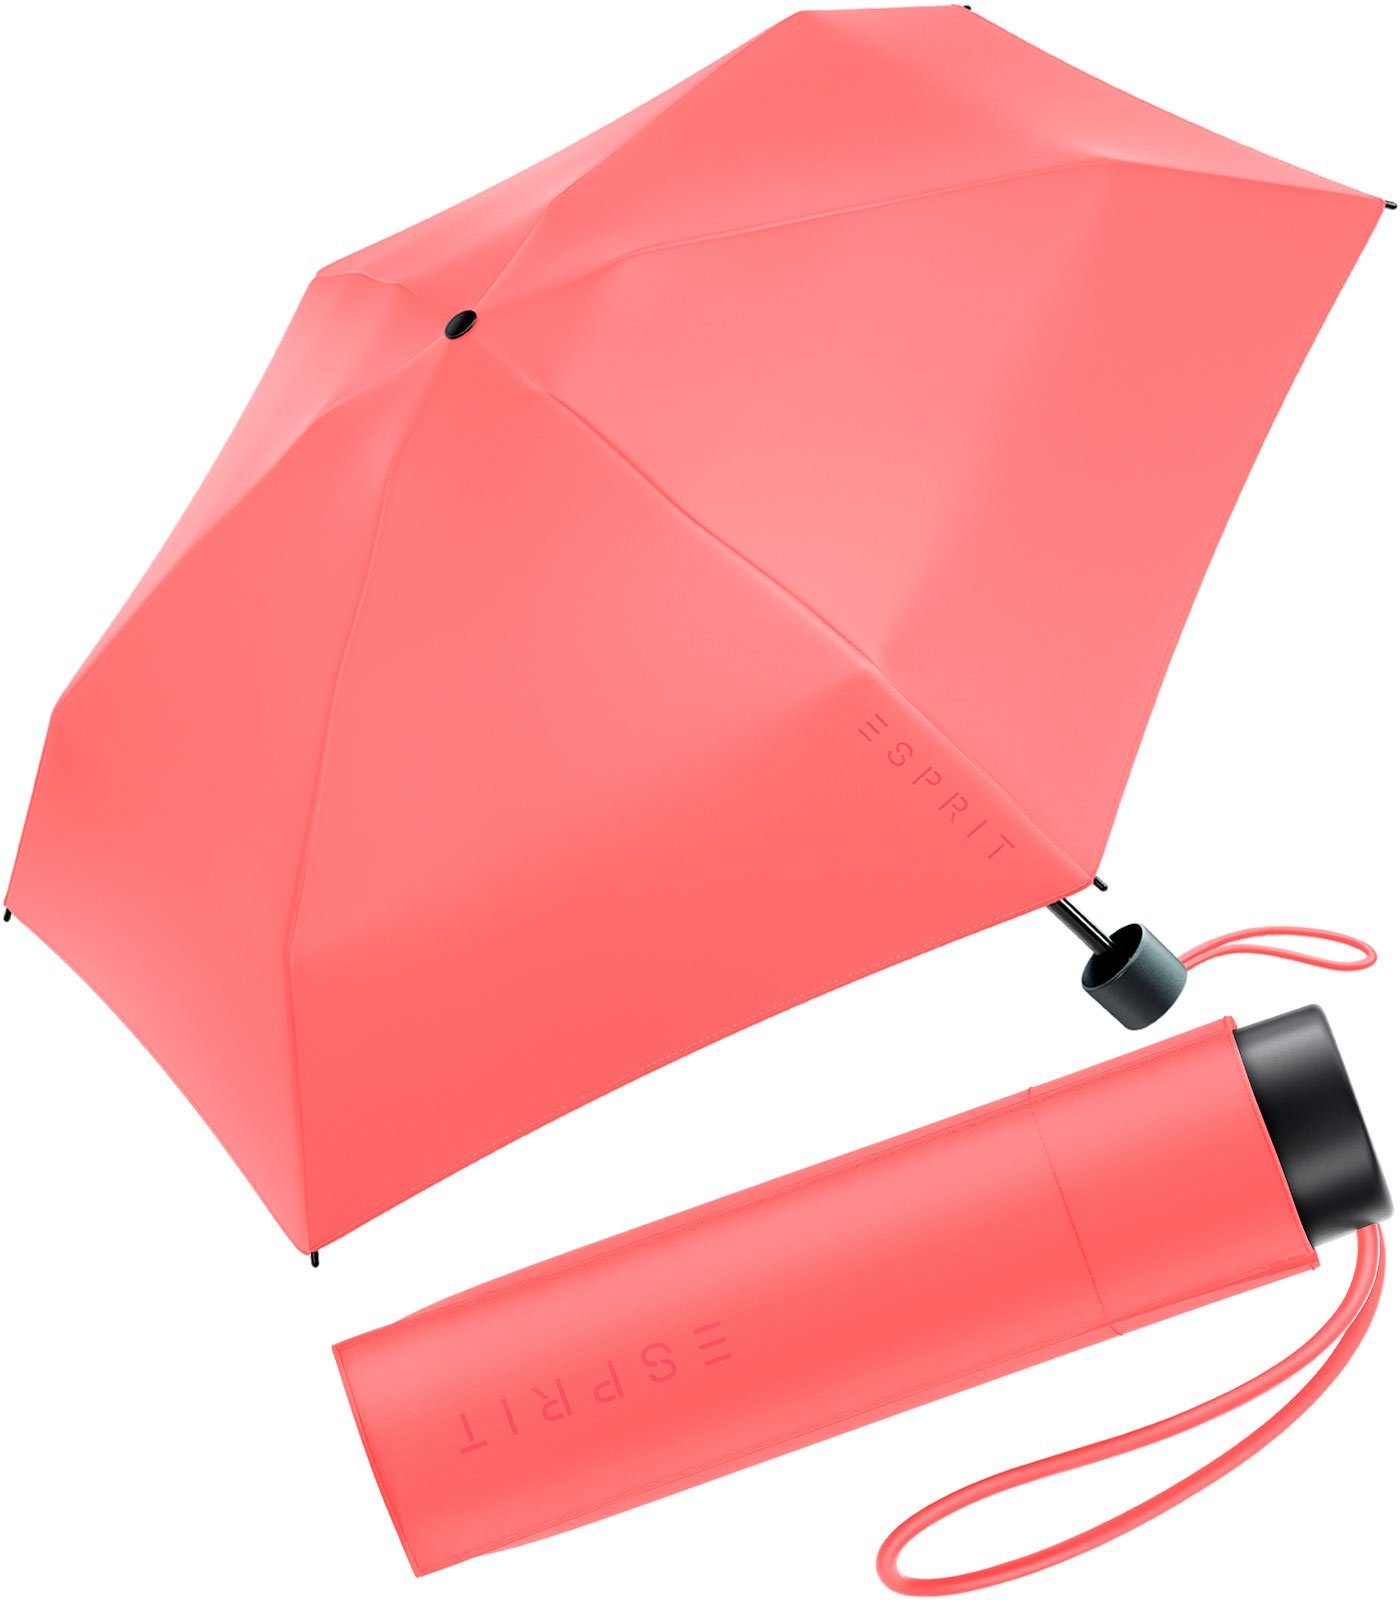 Super neuen Taschenregenschirm winzig Esprit 2023, in Petito Trendfarben FJ koralle Regenschirm Damen Mini klein, den